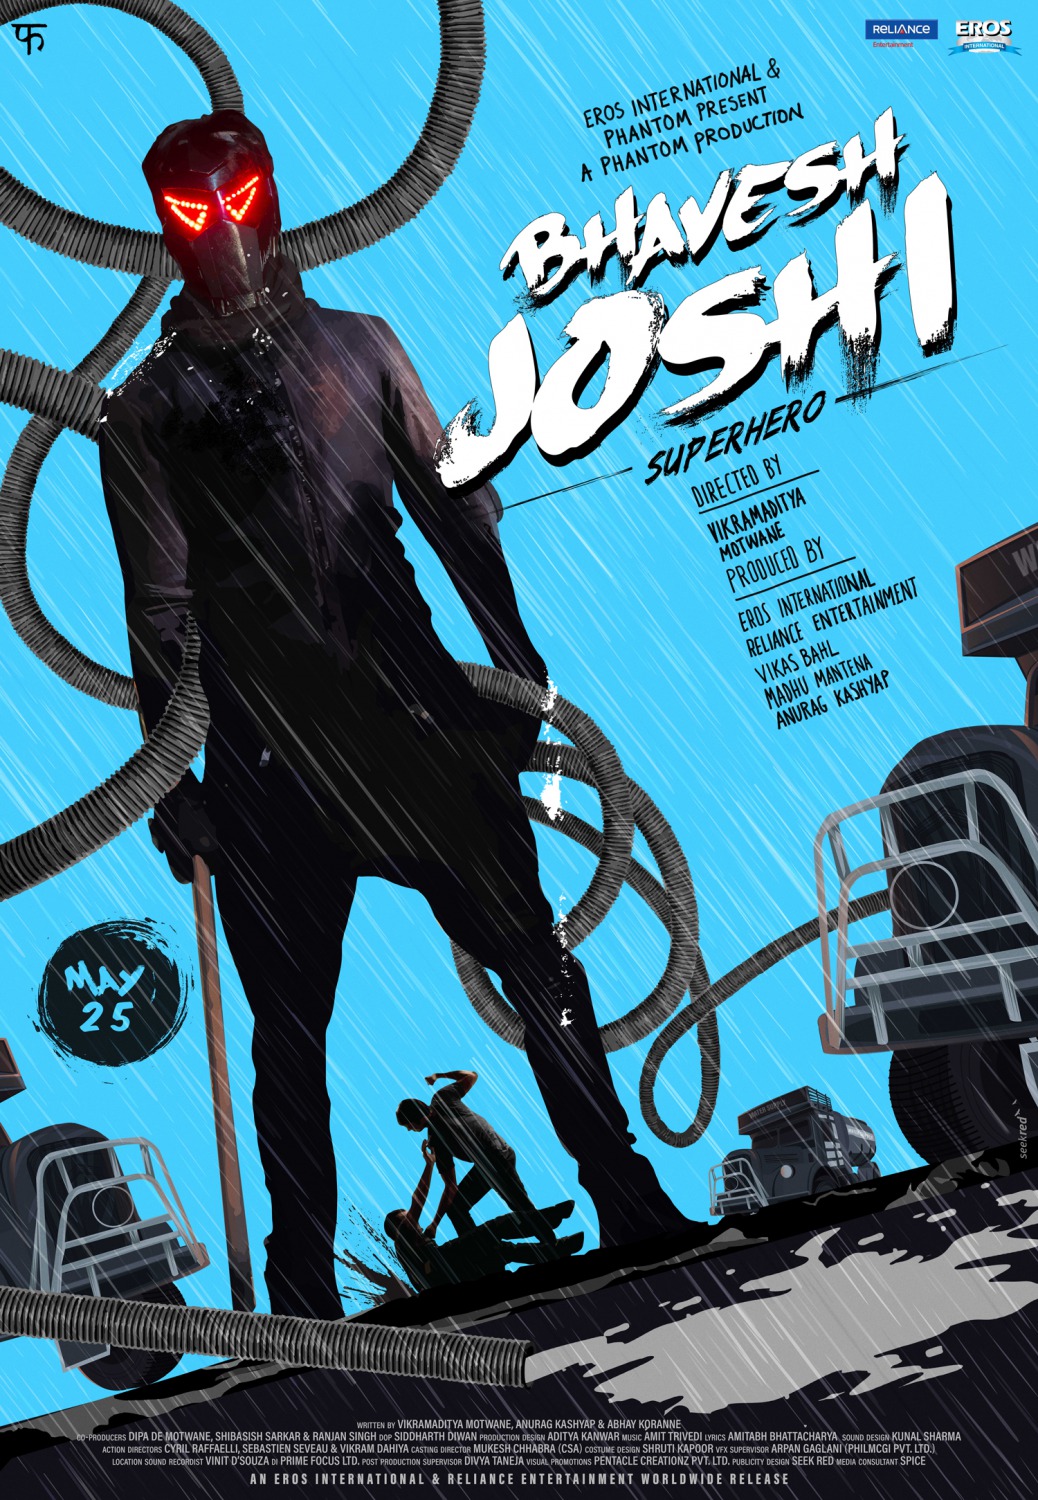 Extra Large Movie Poster Image for Bhavesh Joshi Superhero (#6 of 6)